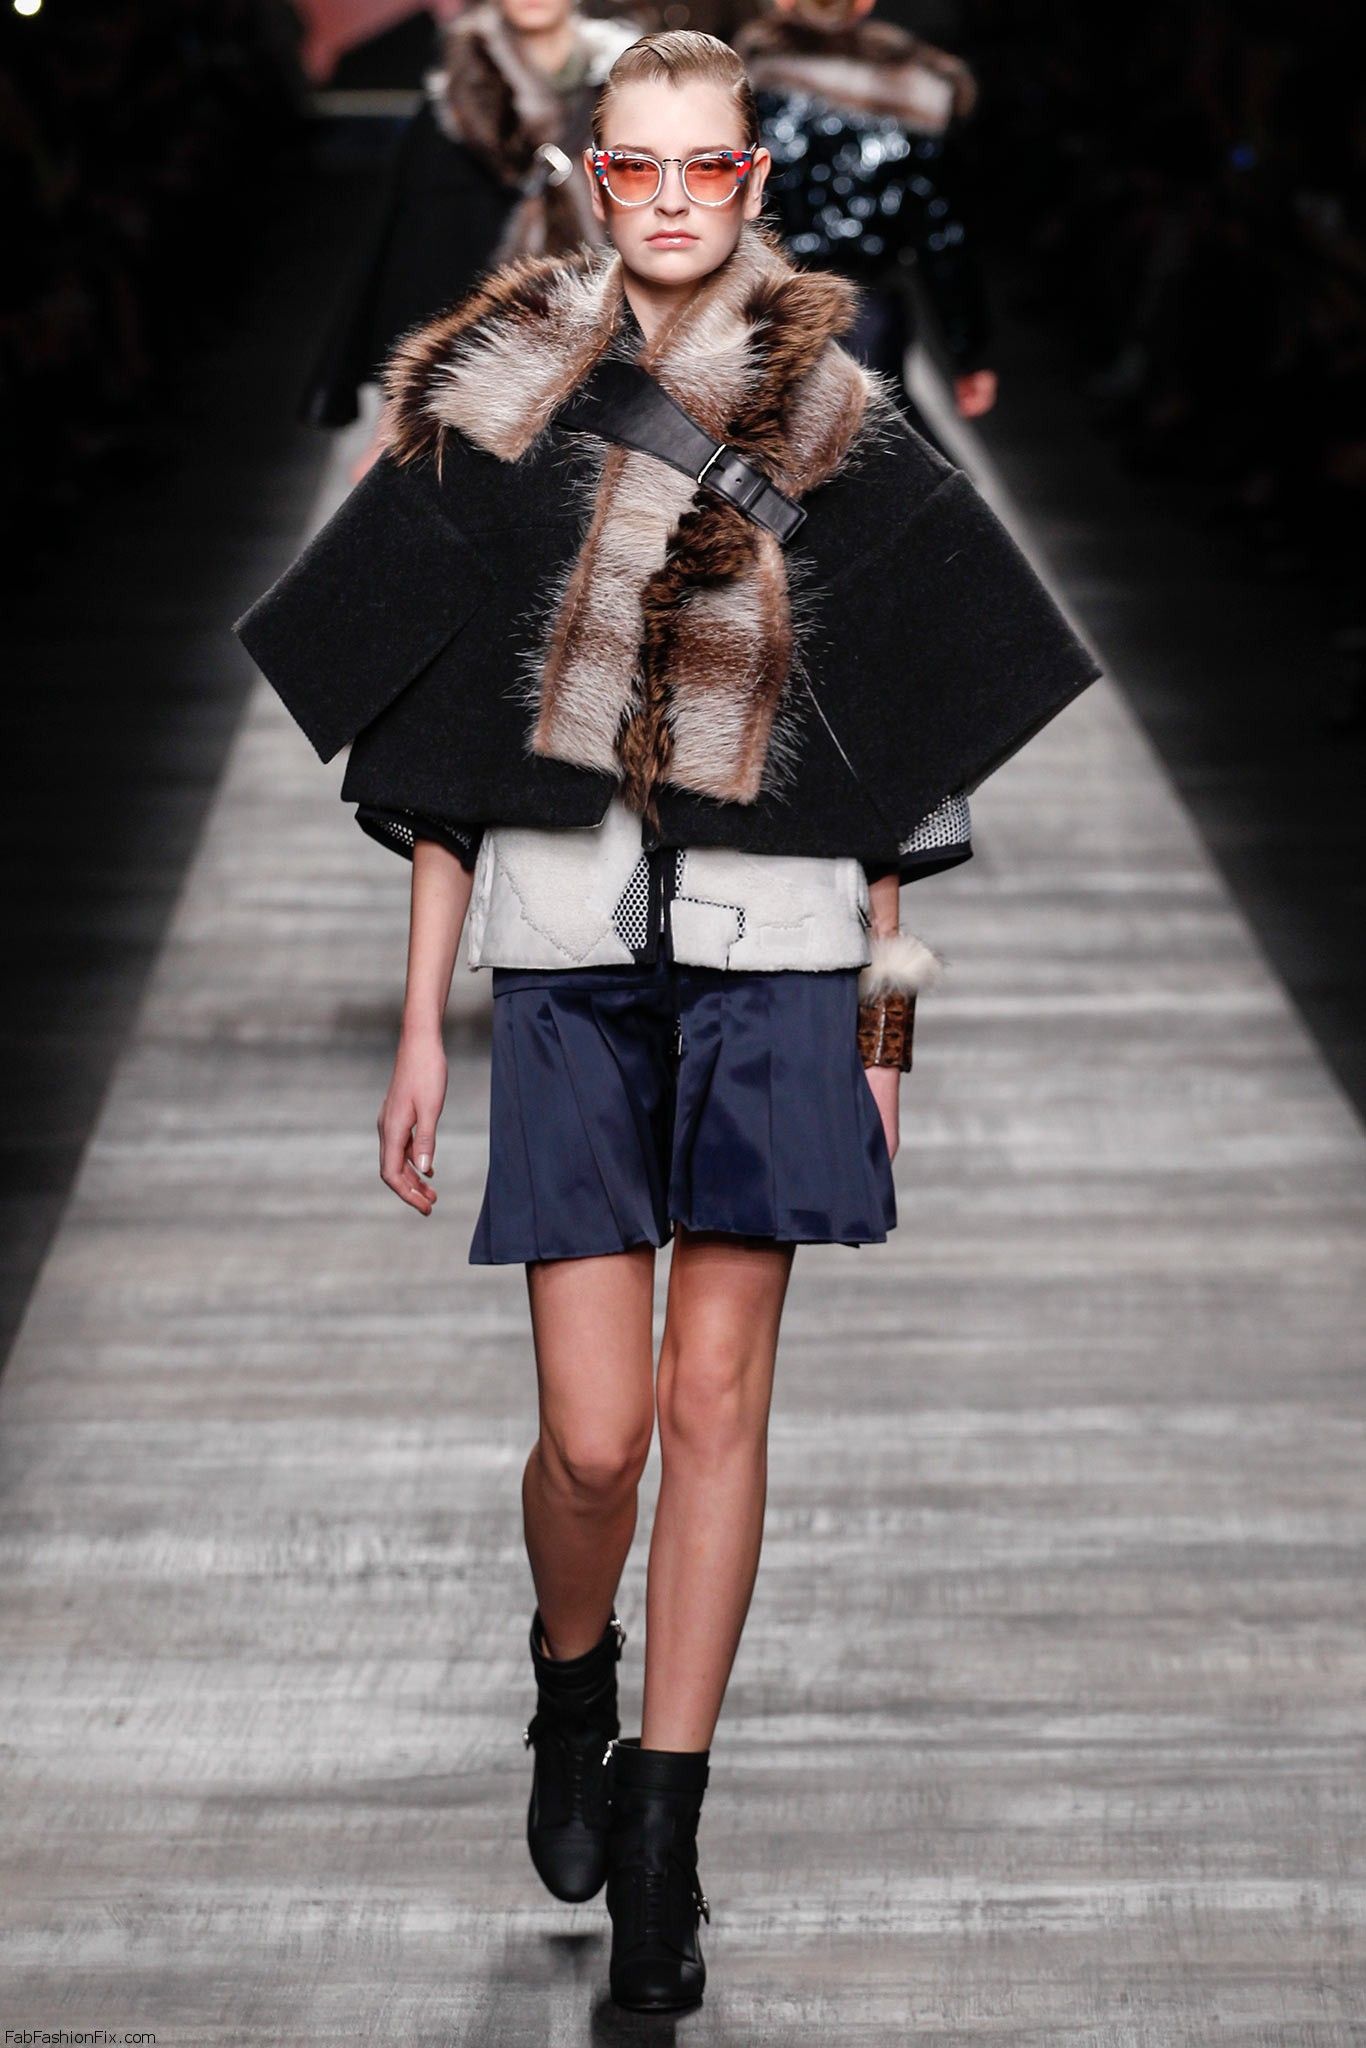 Fendi fall/winter 2014 collection – Milan fashion week | Fab Fashion Fix